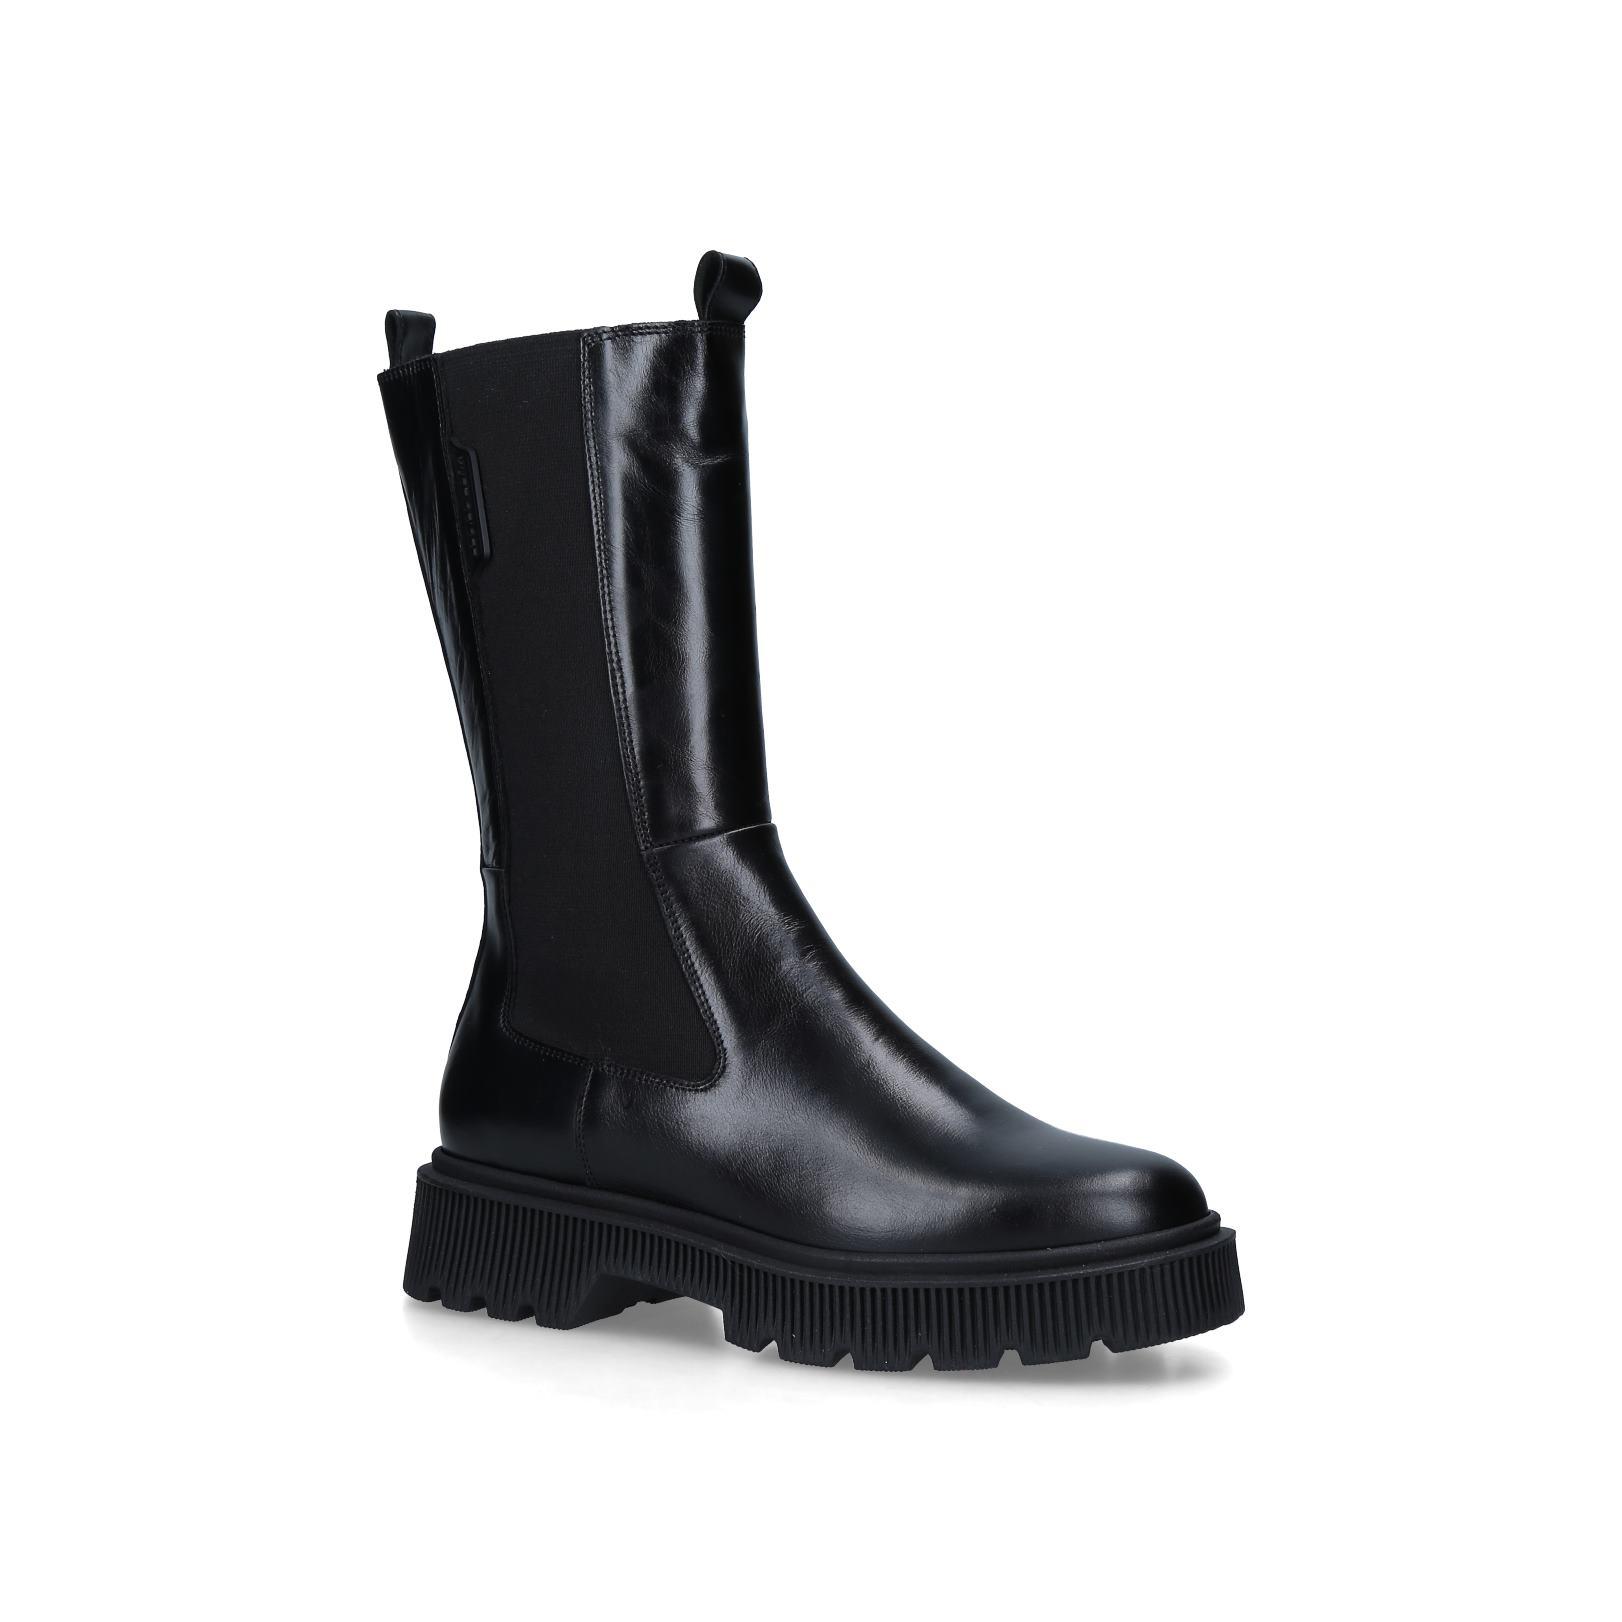 Buy > kurt geiger stint calf boots > in stock